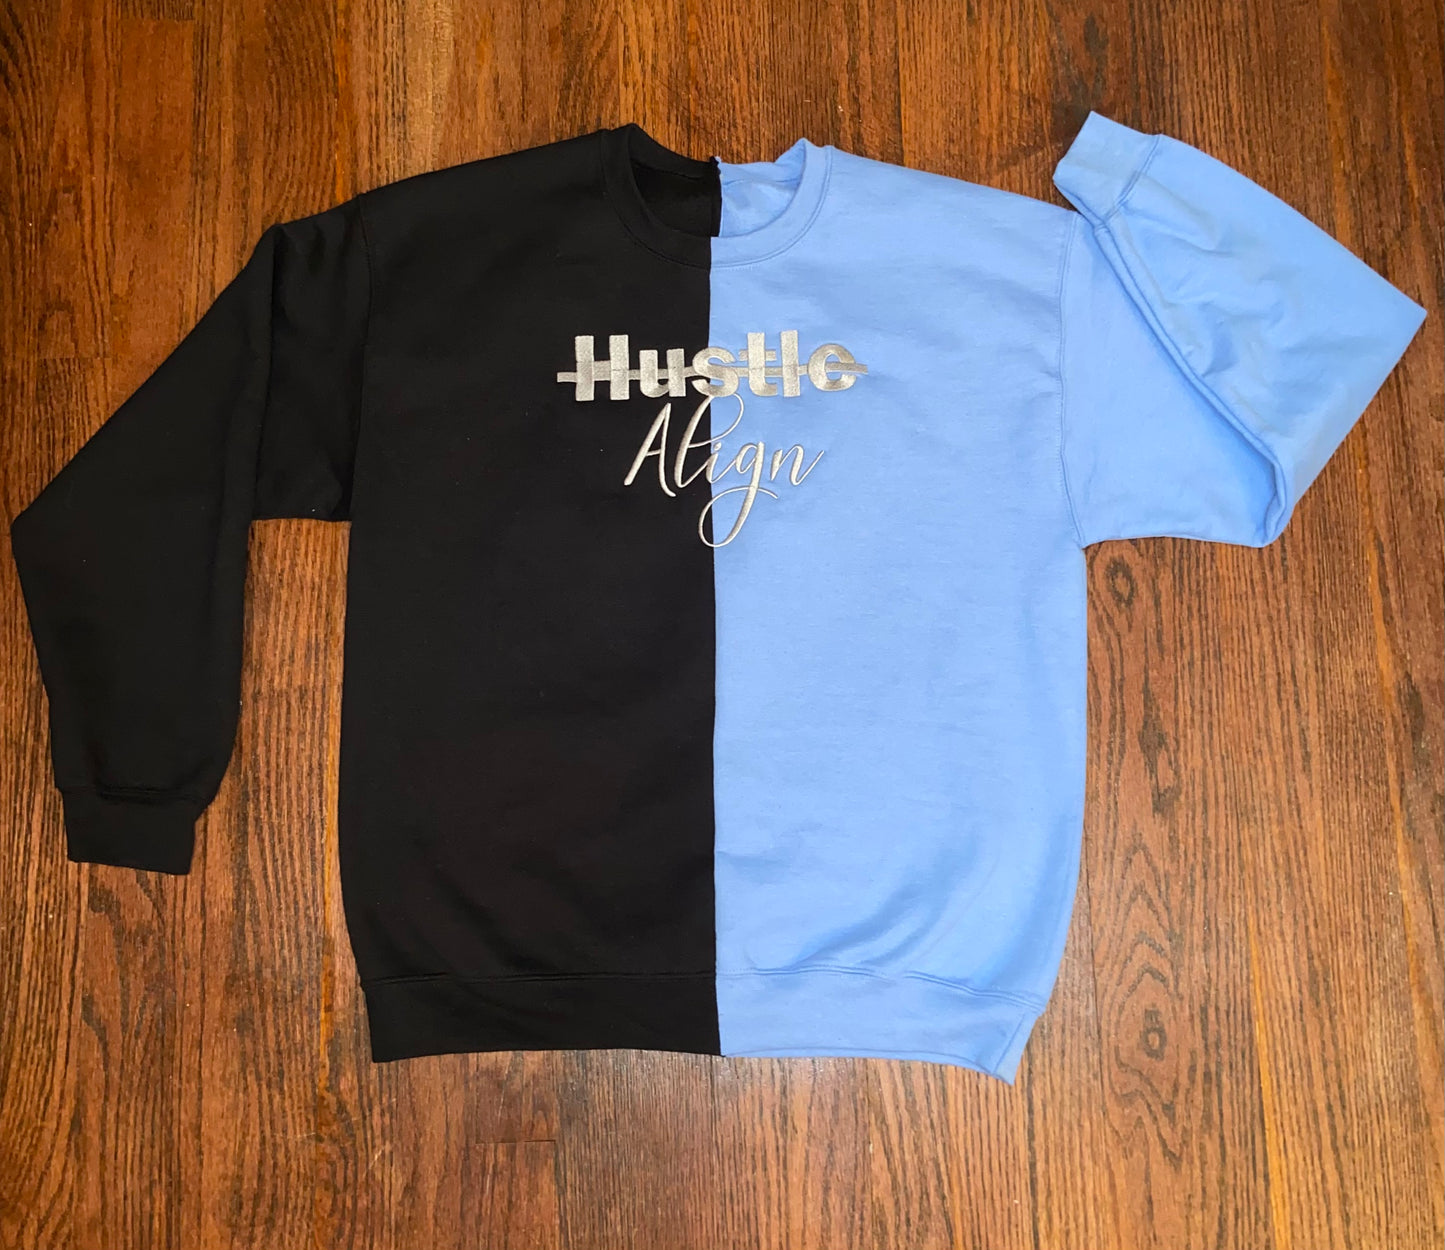 Hustle/Align Sweatshirt